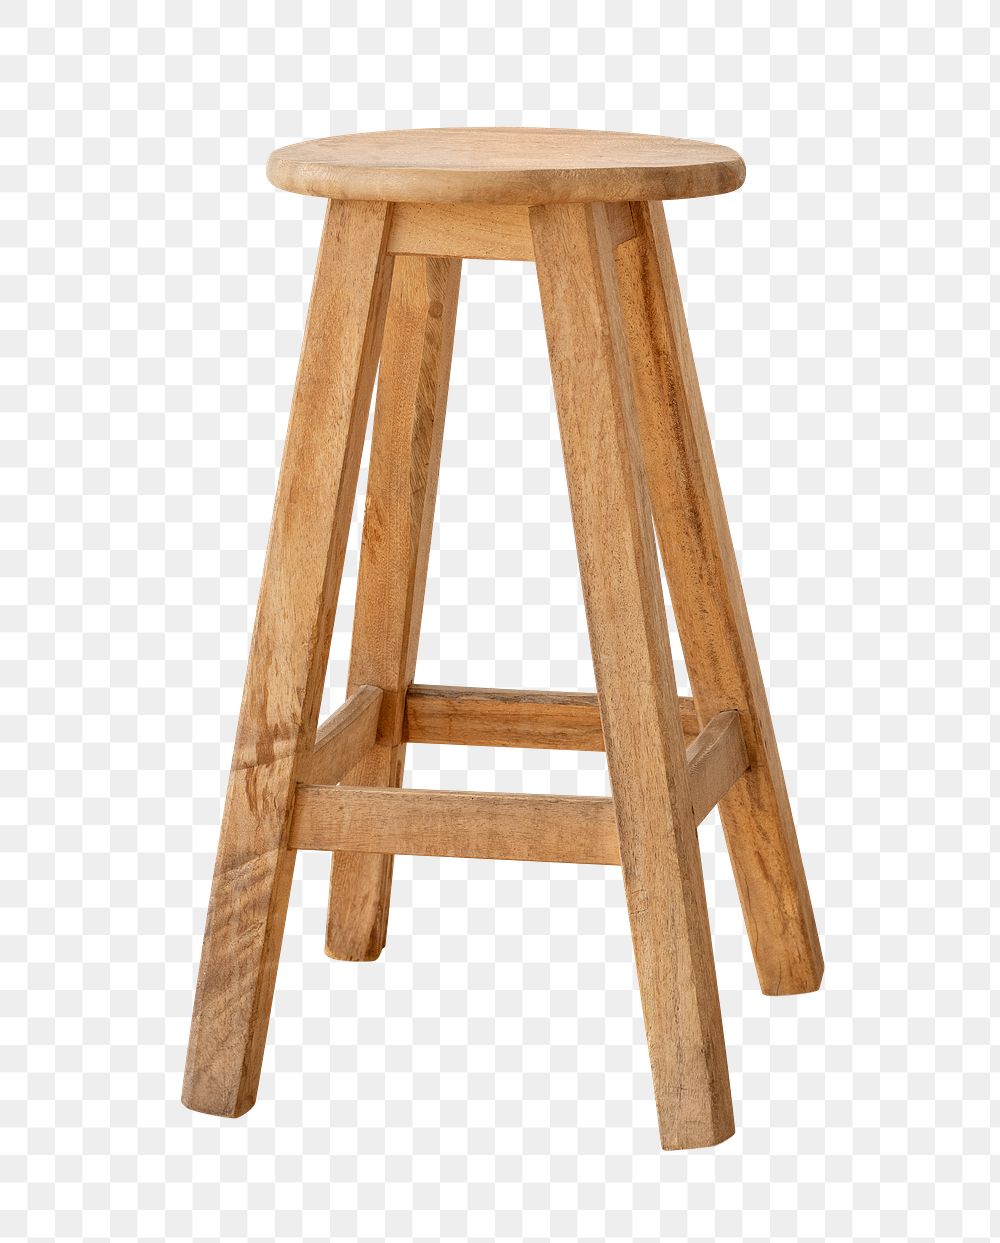 Single wooden stool design element